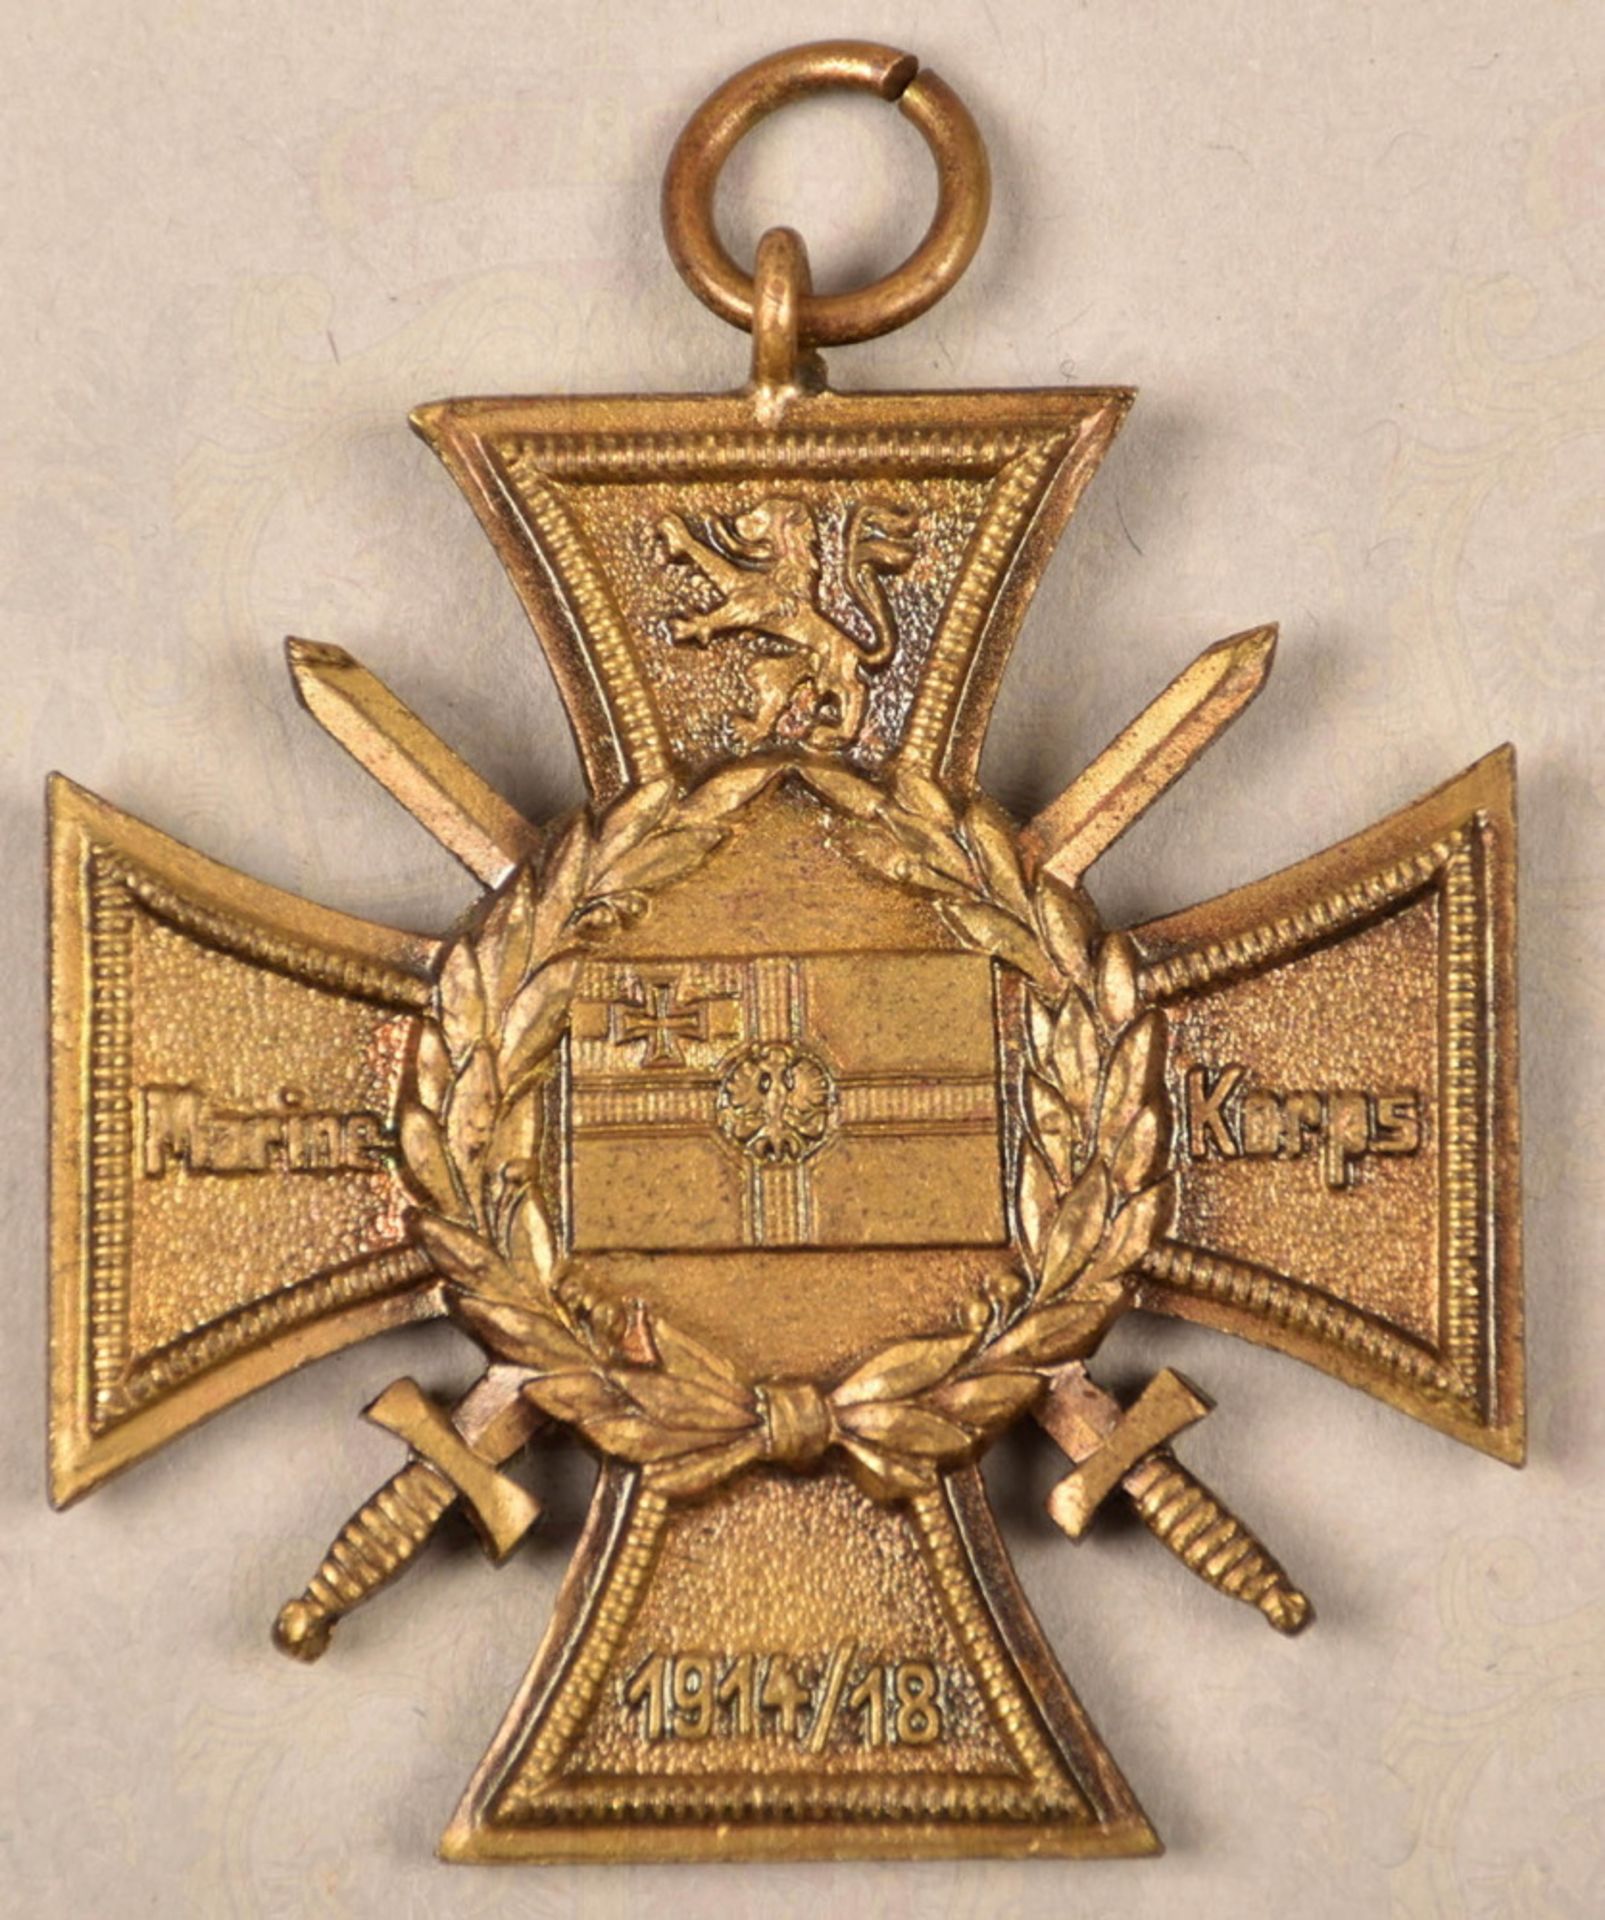 Commemorative cross German Naval Corps Flanders - Image 2 of 2